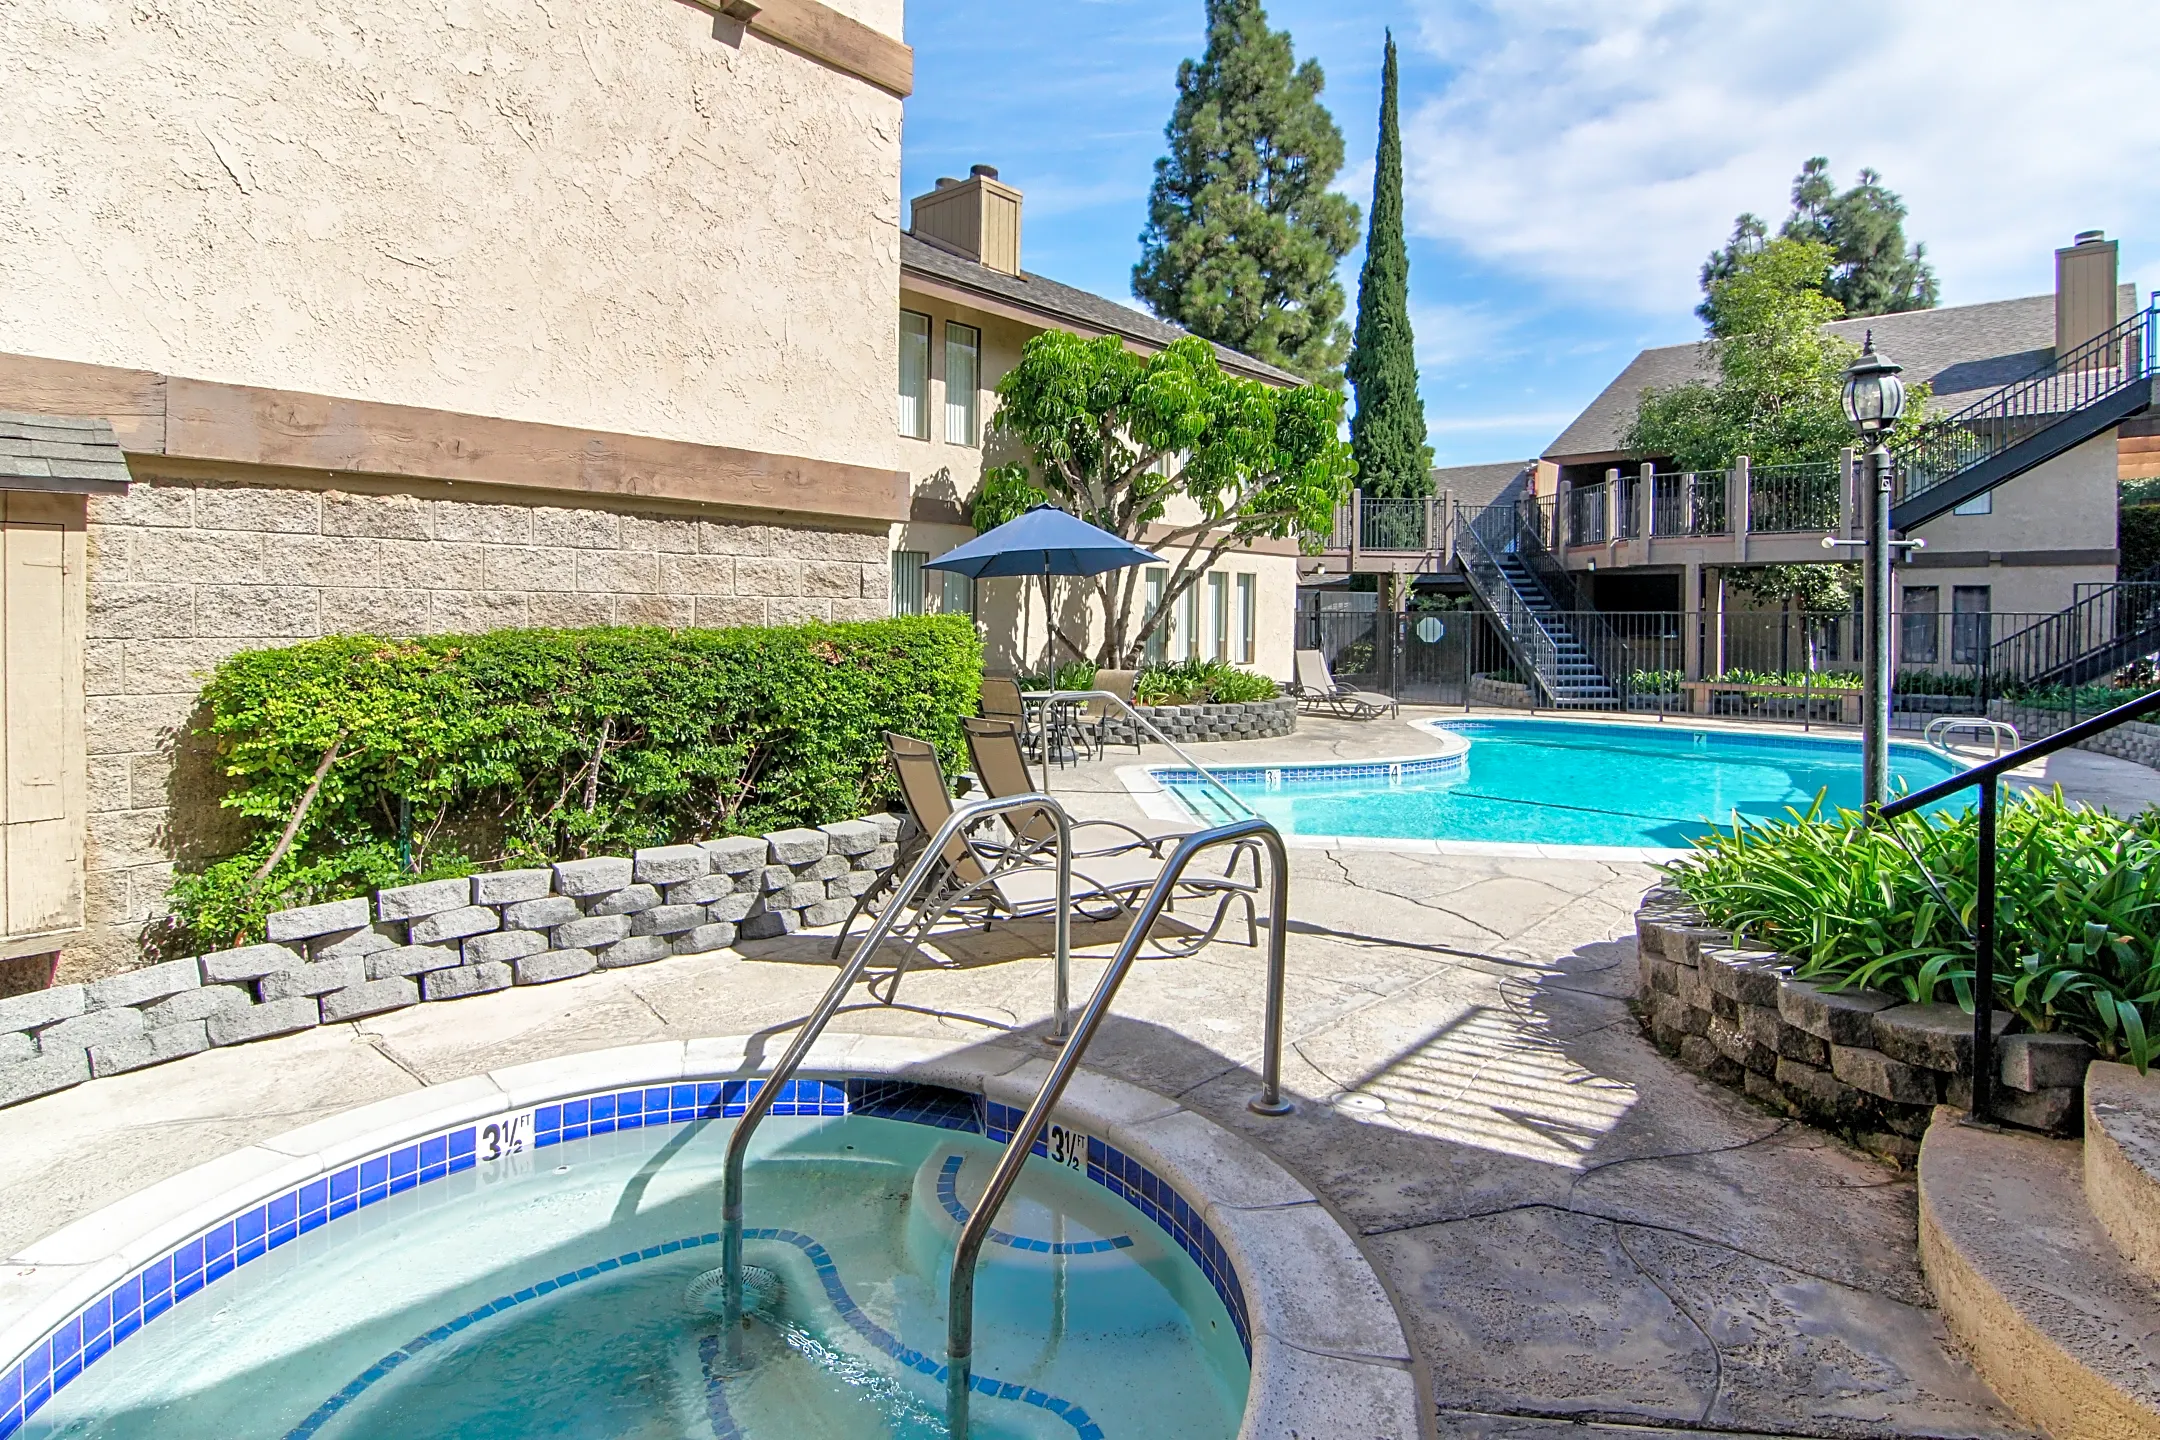 Pool - Heatherwood Apartments - Garden Grove, CA